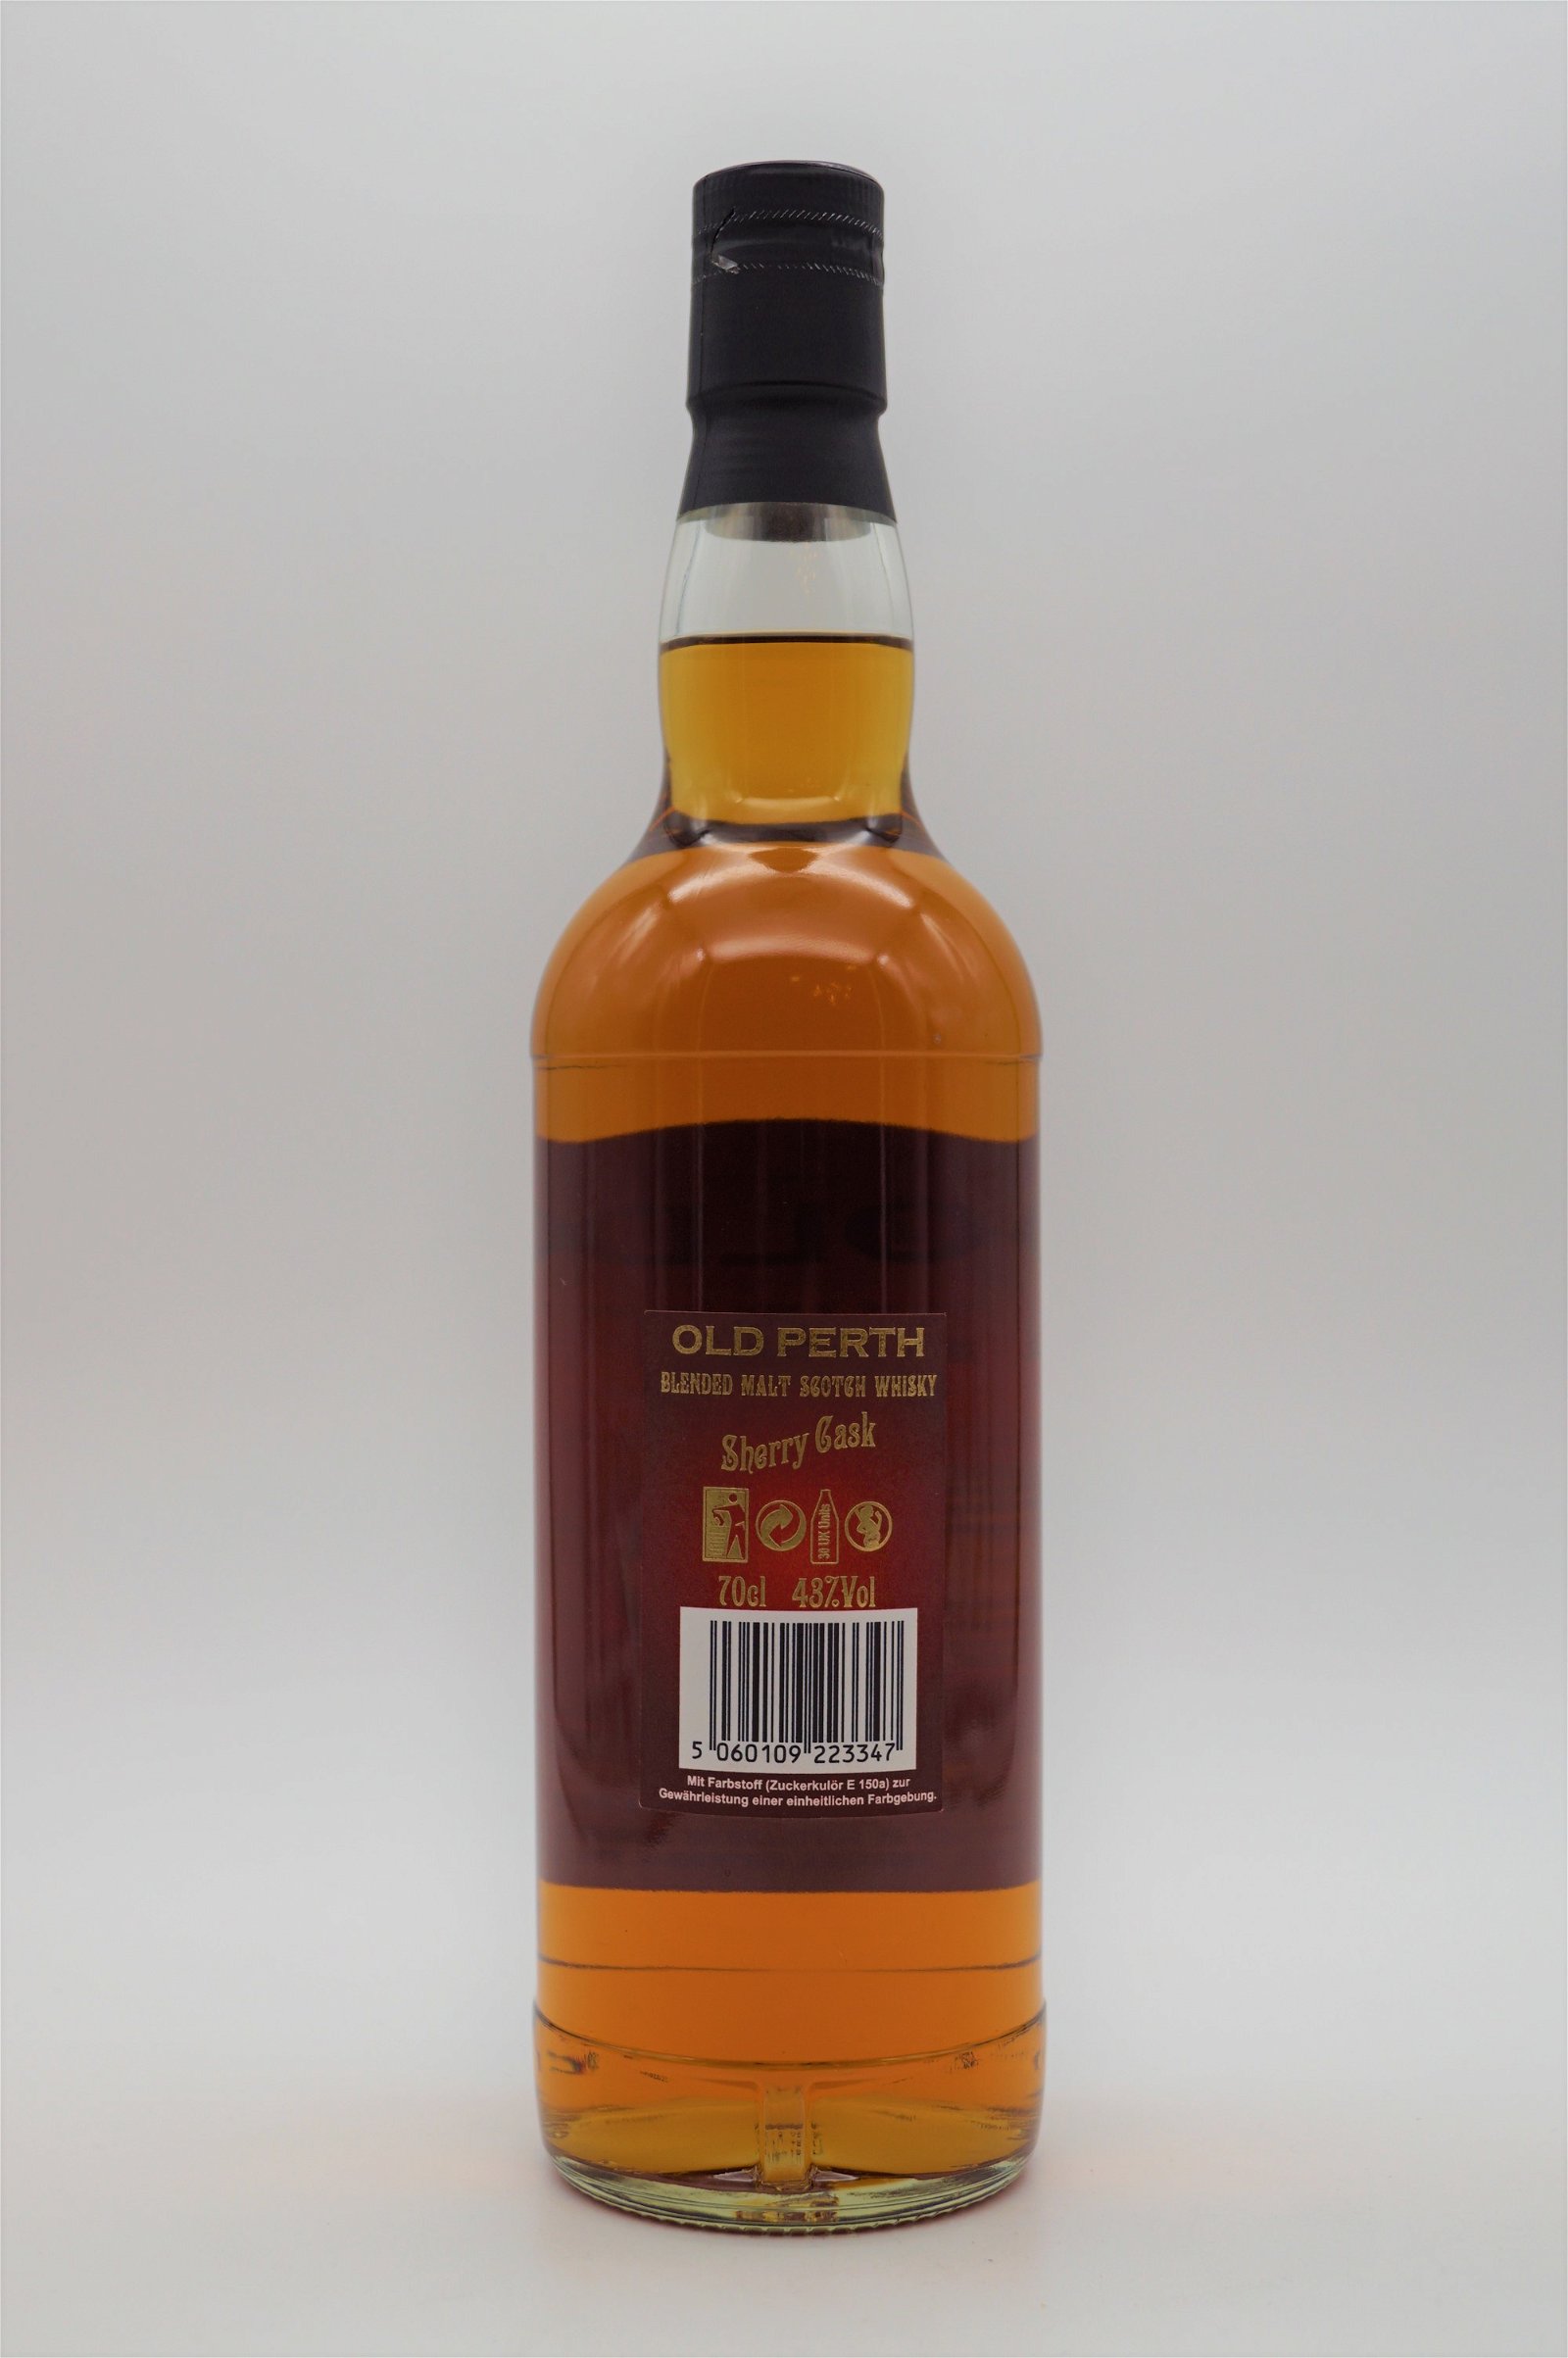 Old Perth Sherry Cask Blended Malt Scotch Whisky